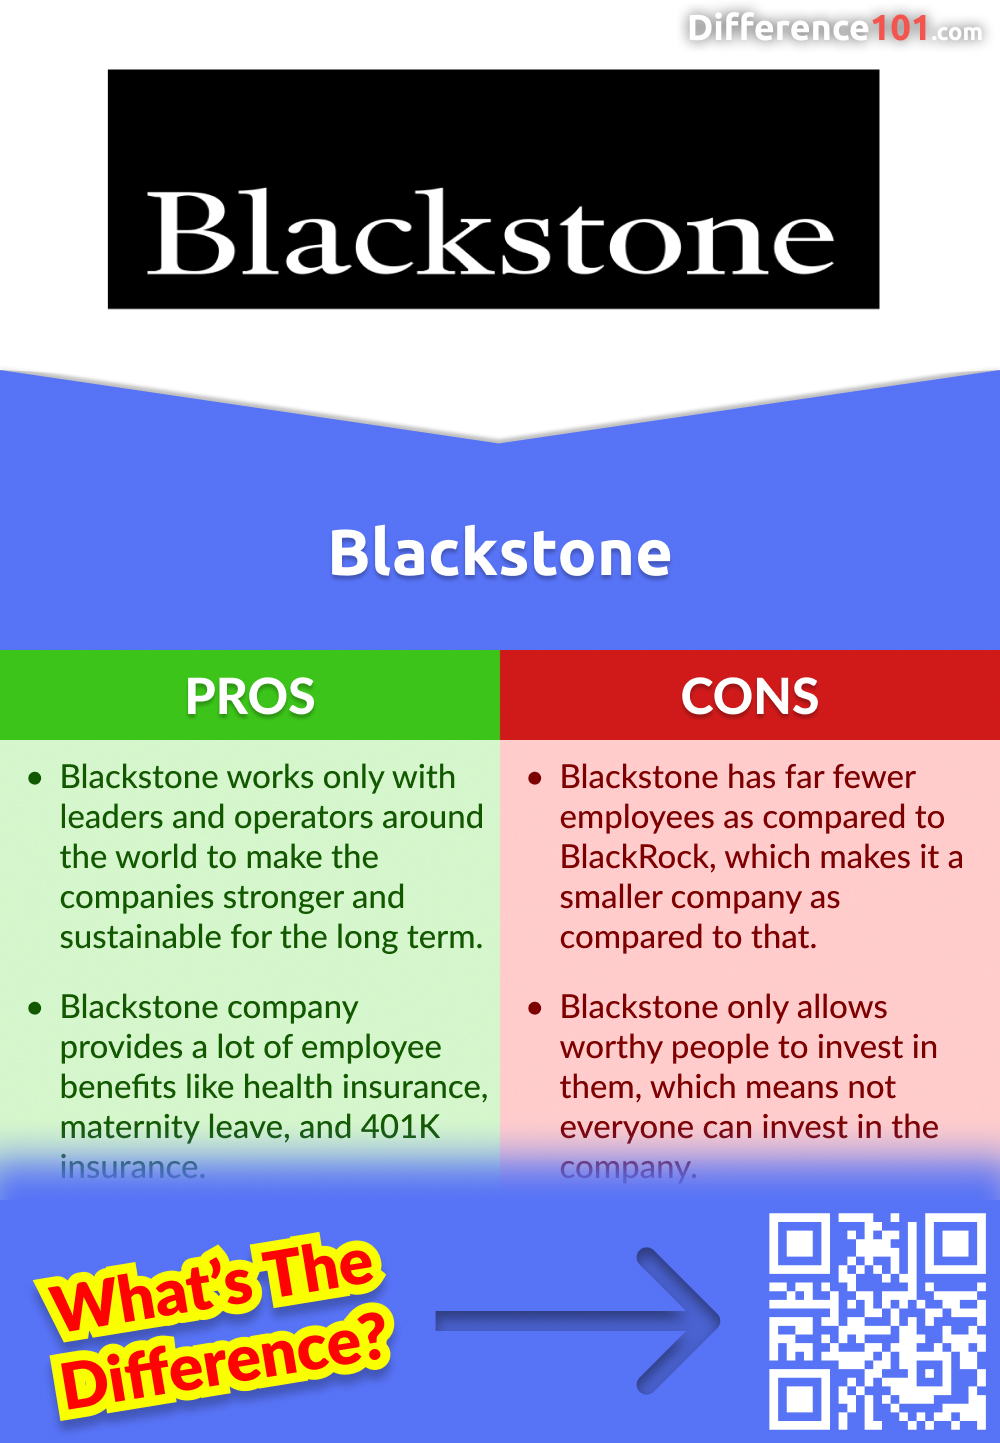 Blackstone Pros and Cons